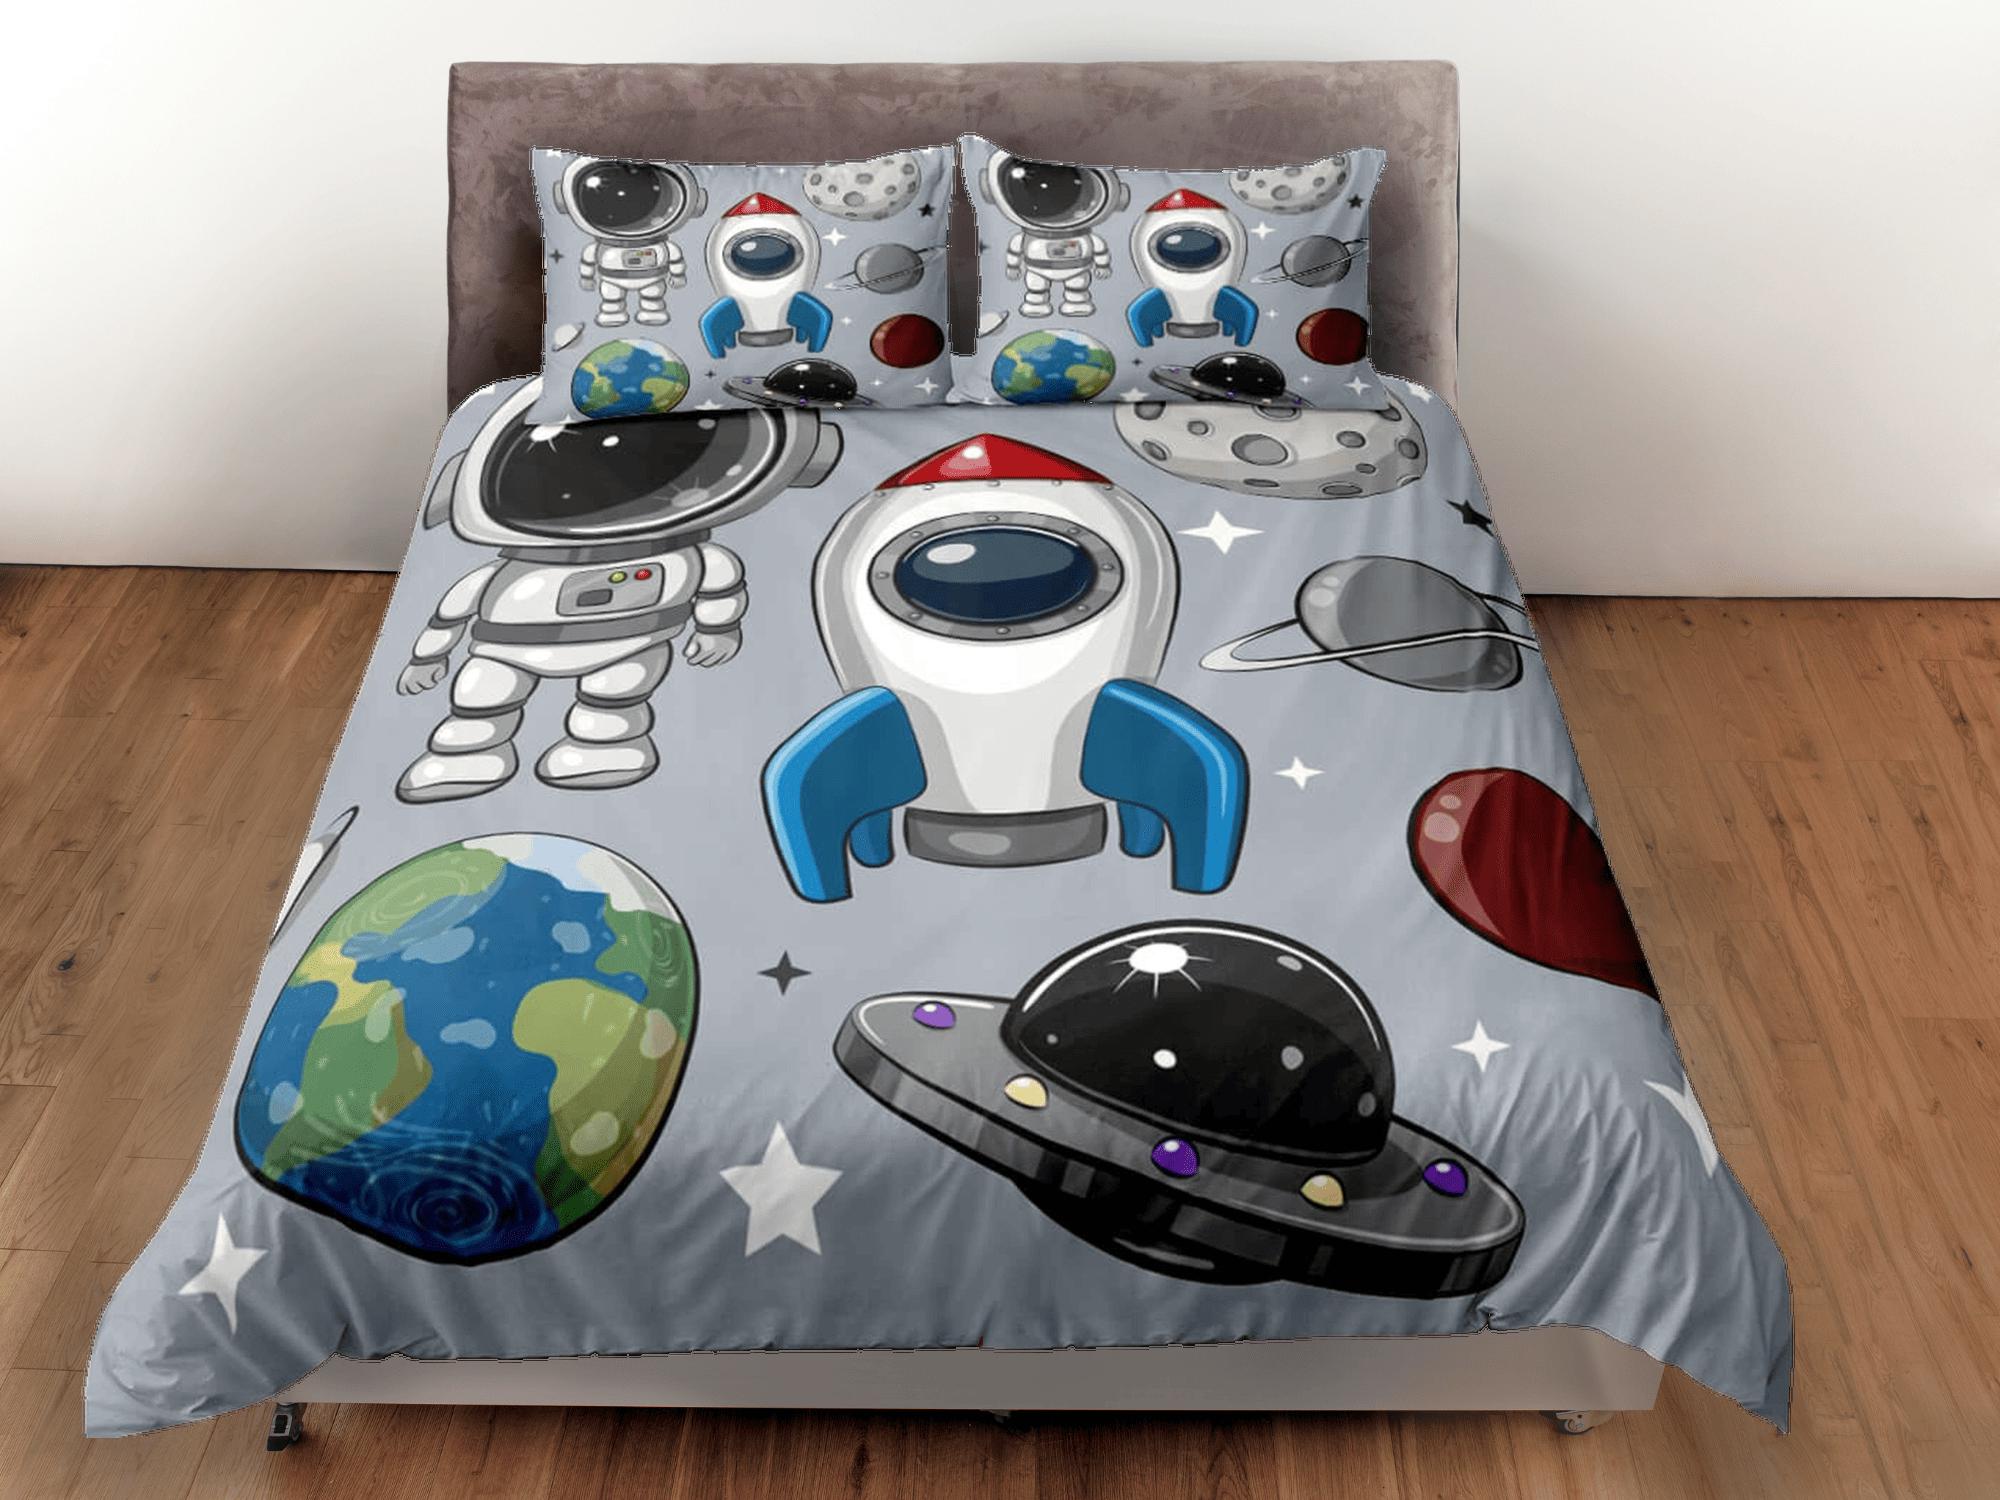 daintyduvet Spaceship, astronaut, planet duvet cover set for kids, galaxy bedding set full, king, queen, science dorm bedding, toddler bedding aesthetic